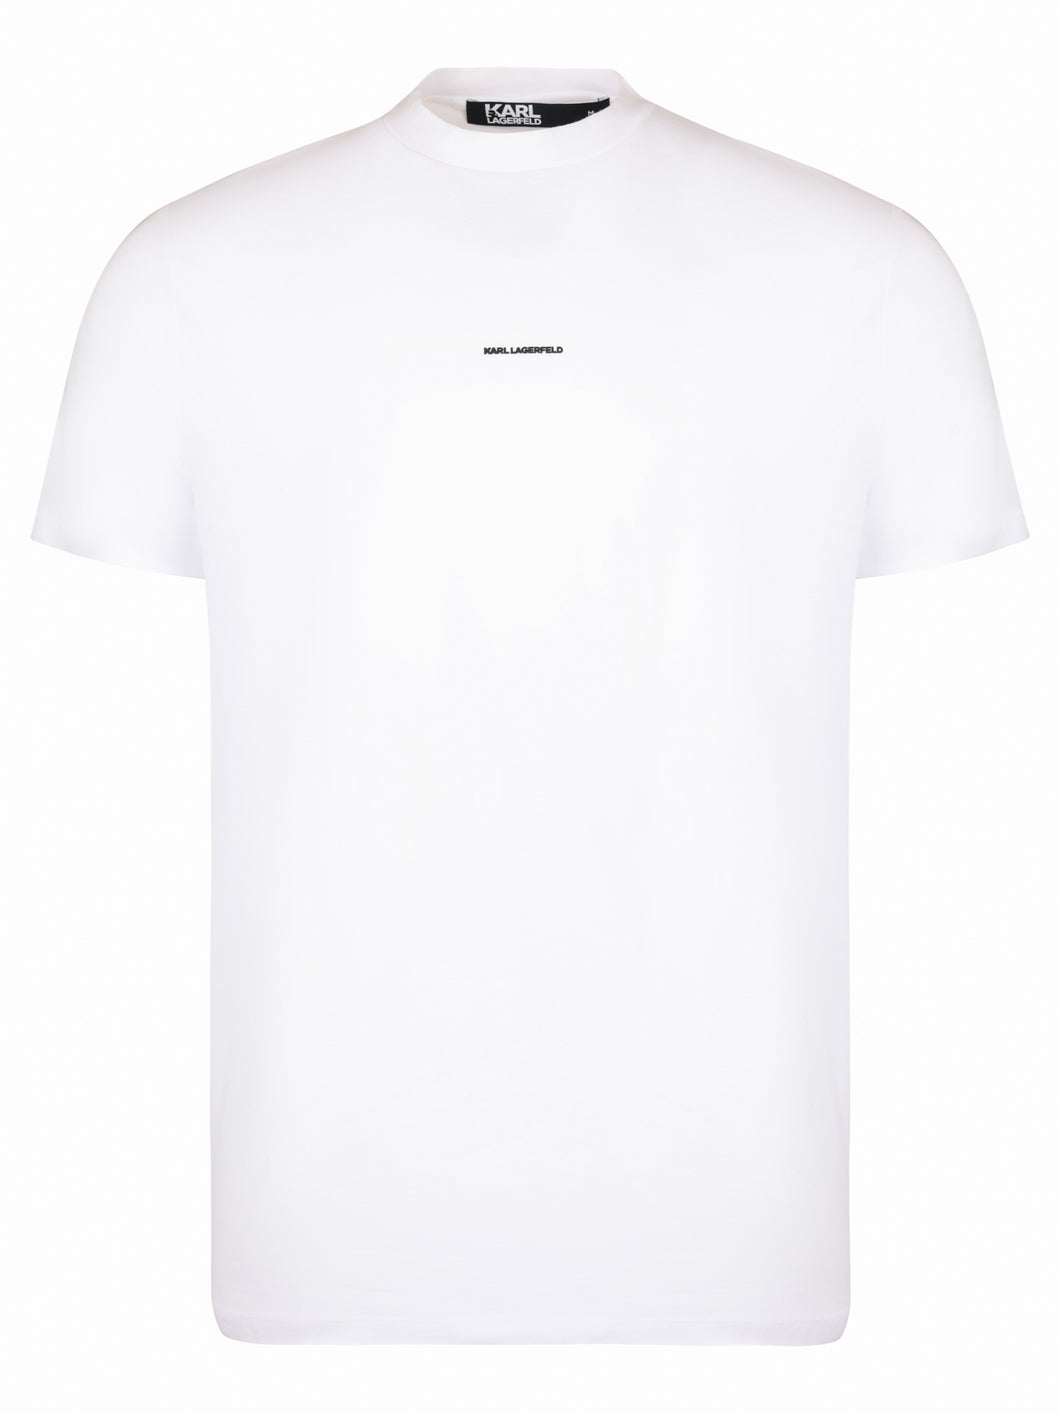 Lagerfeld Chest Logo Tee White